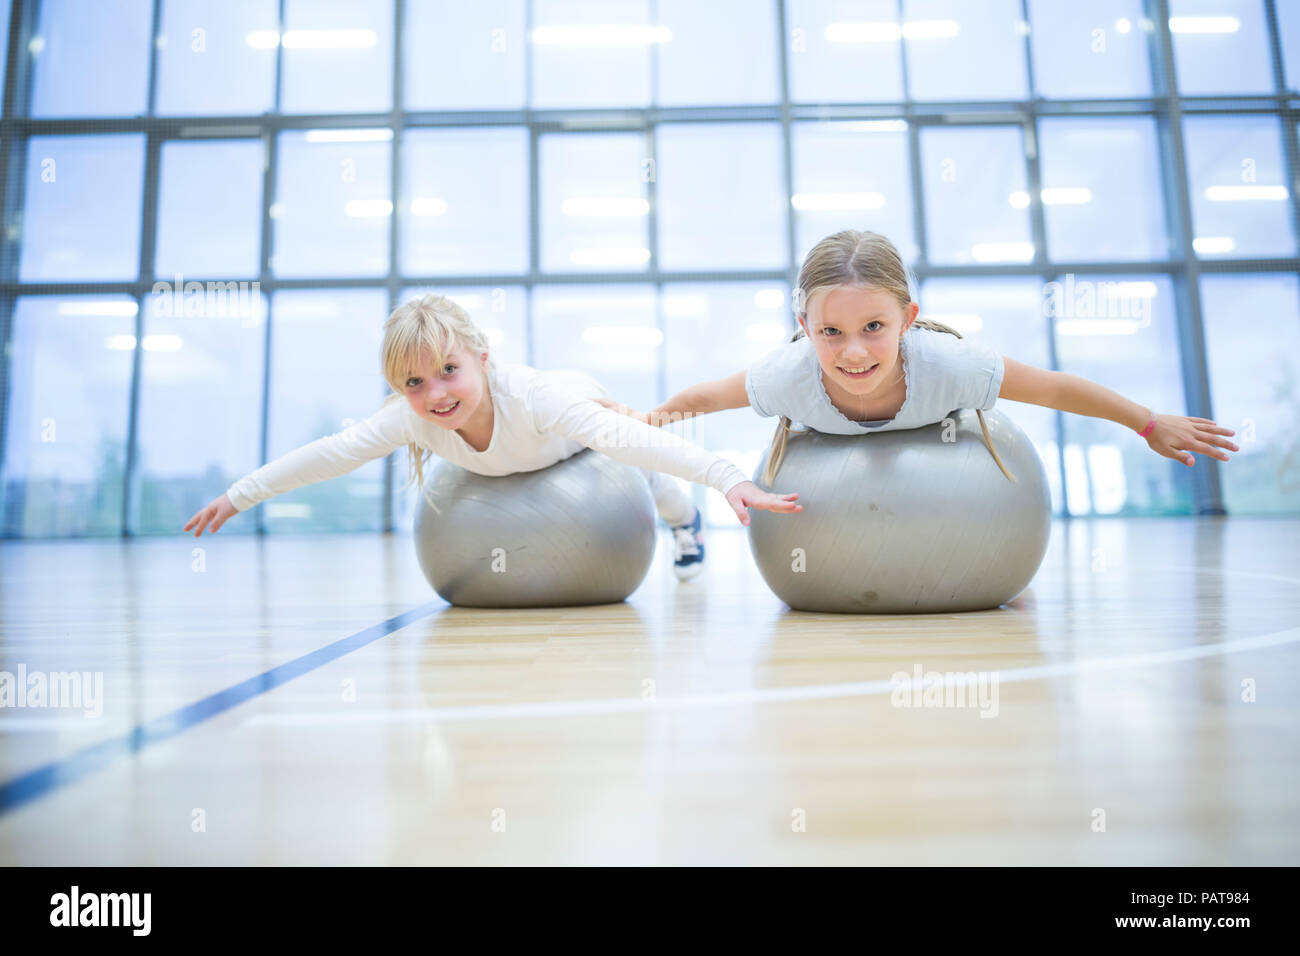 Portrait of smiling schoolgirls balancing on gym balls in gym class Stock Photo